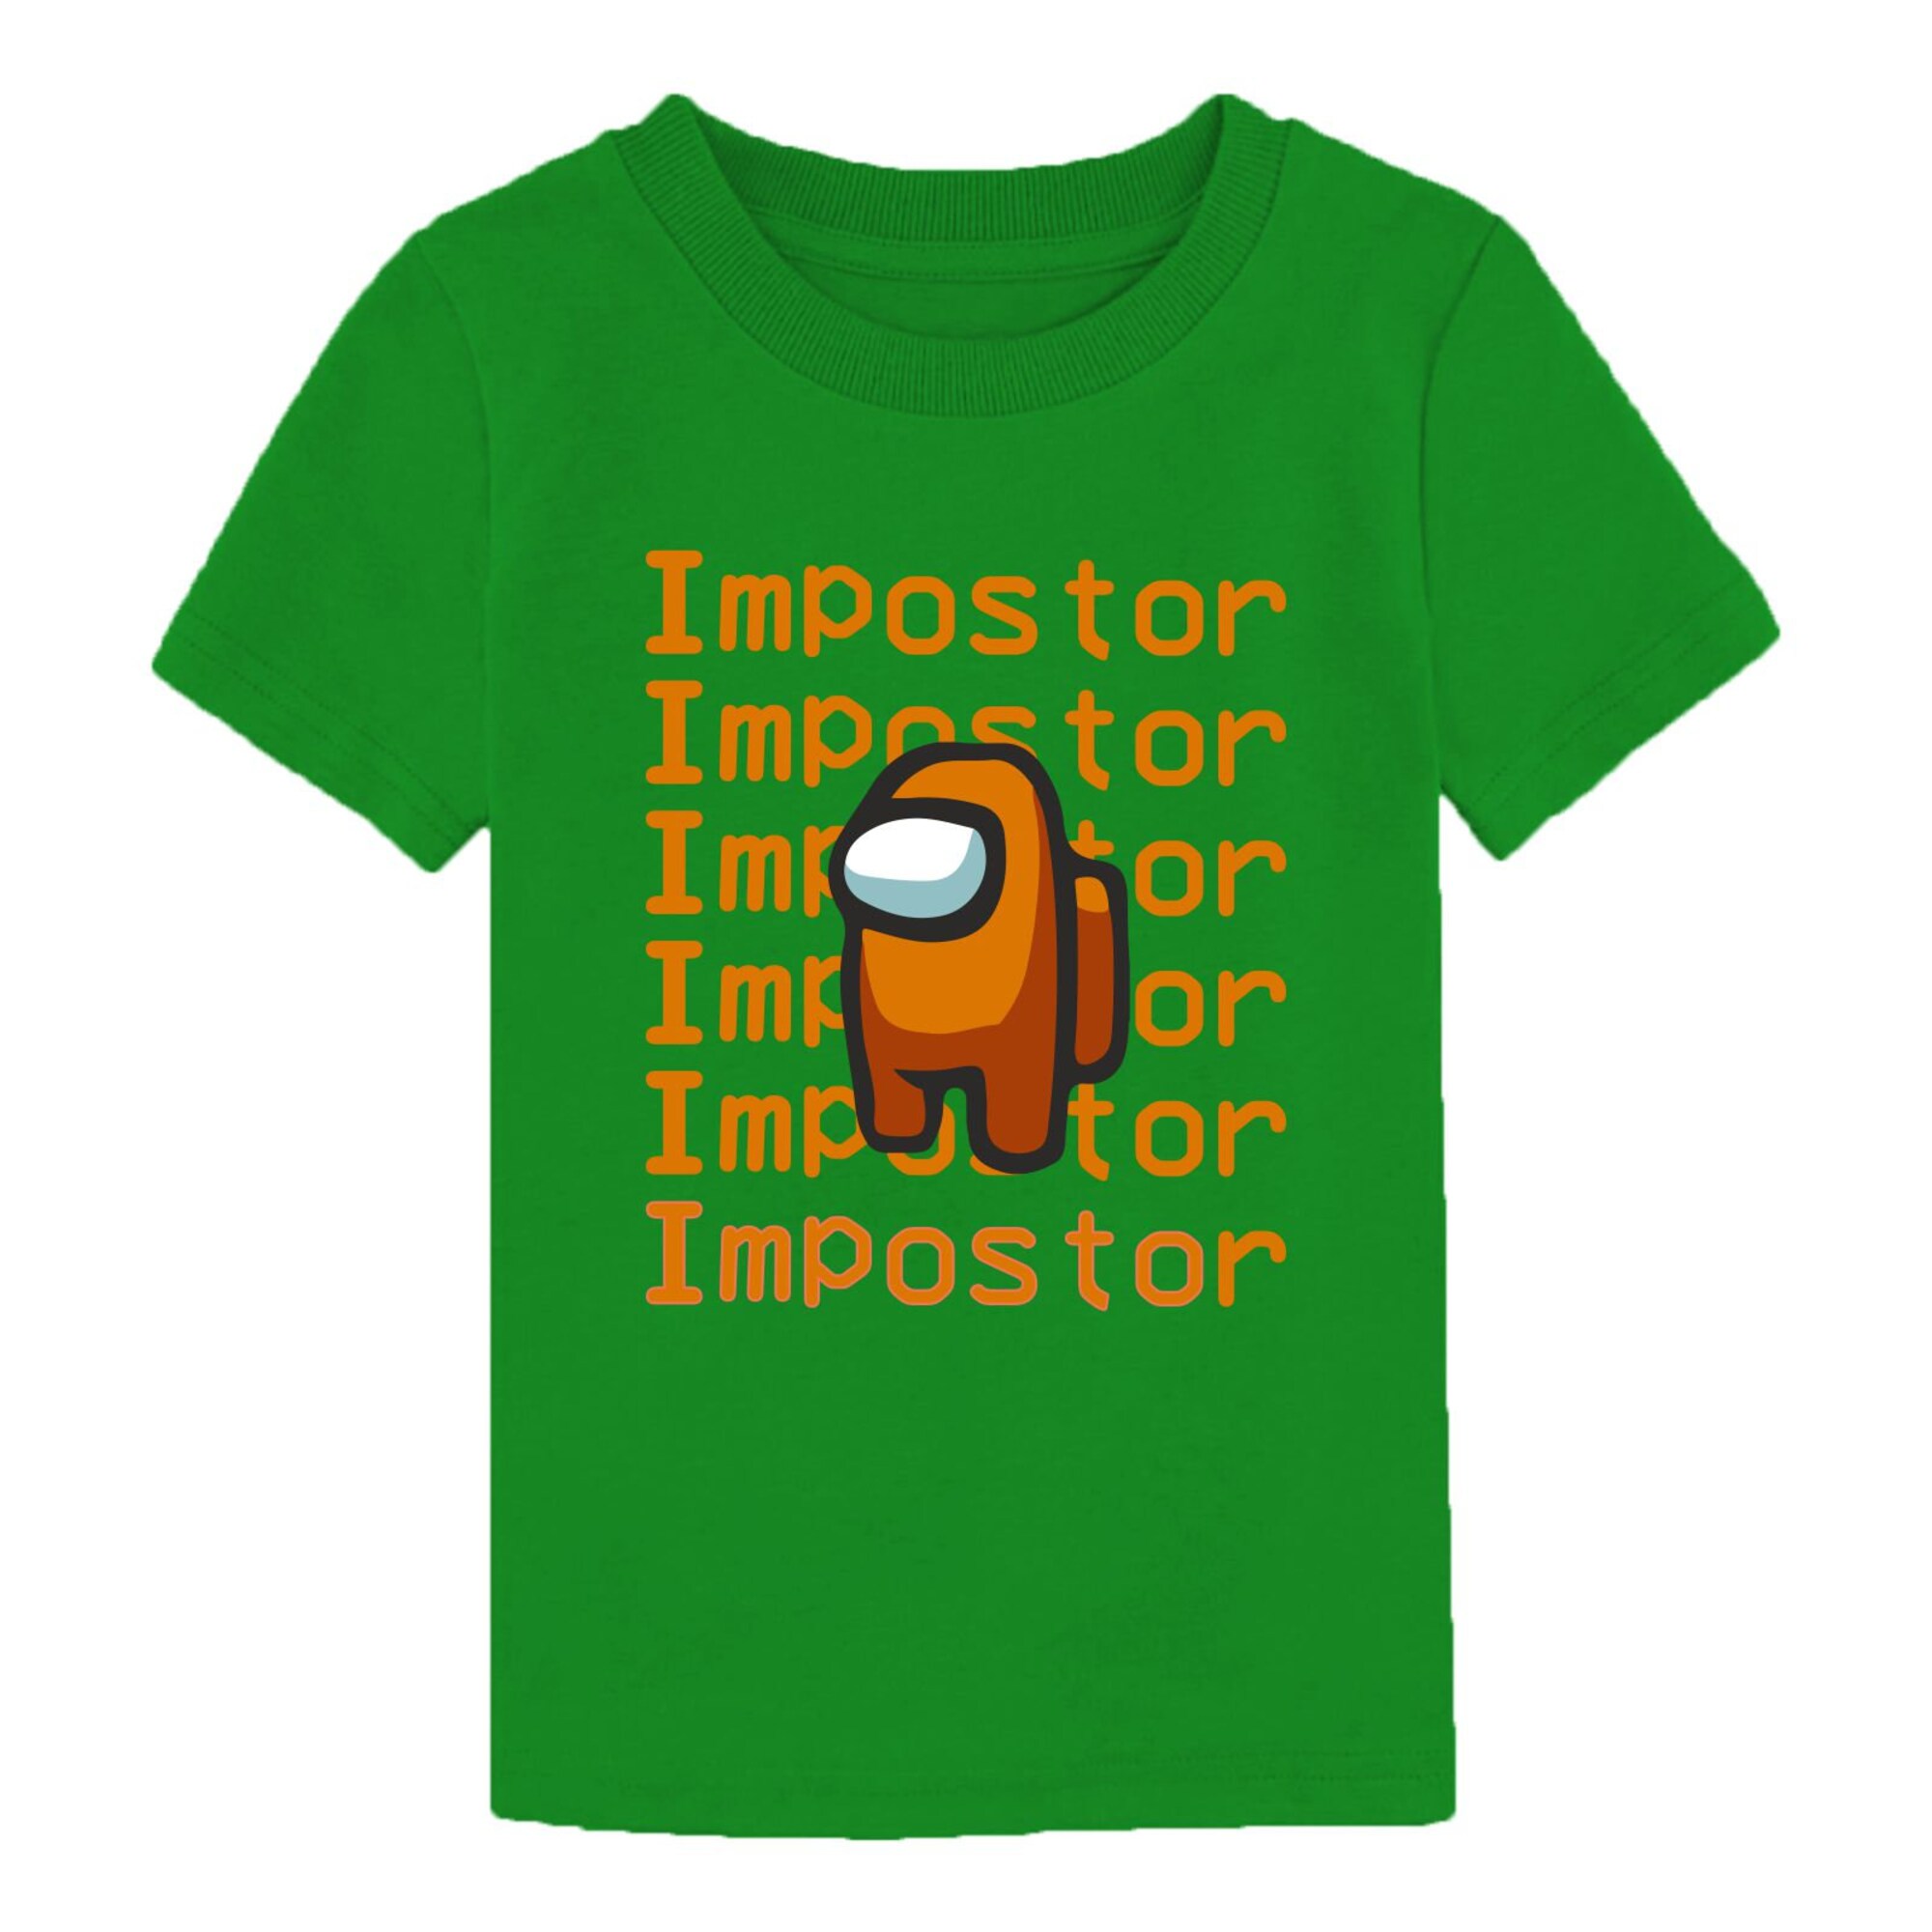 Discover Impostor Gaming T Shirt Among Us Gamer Birthday Christmas Party Boys Girls Kids Top Gift